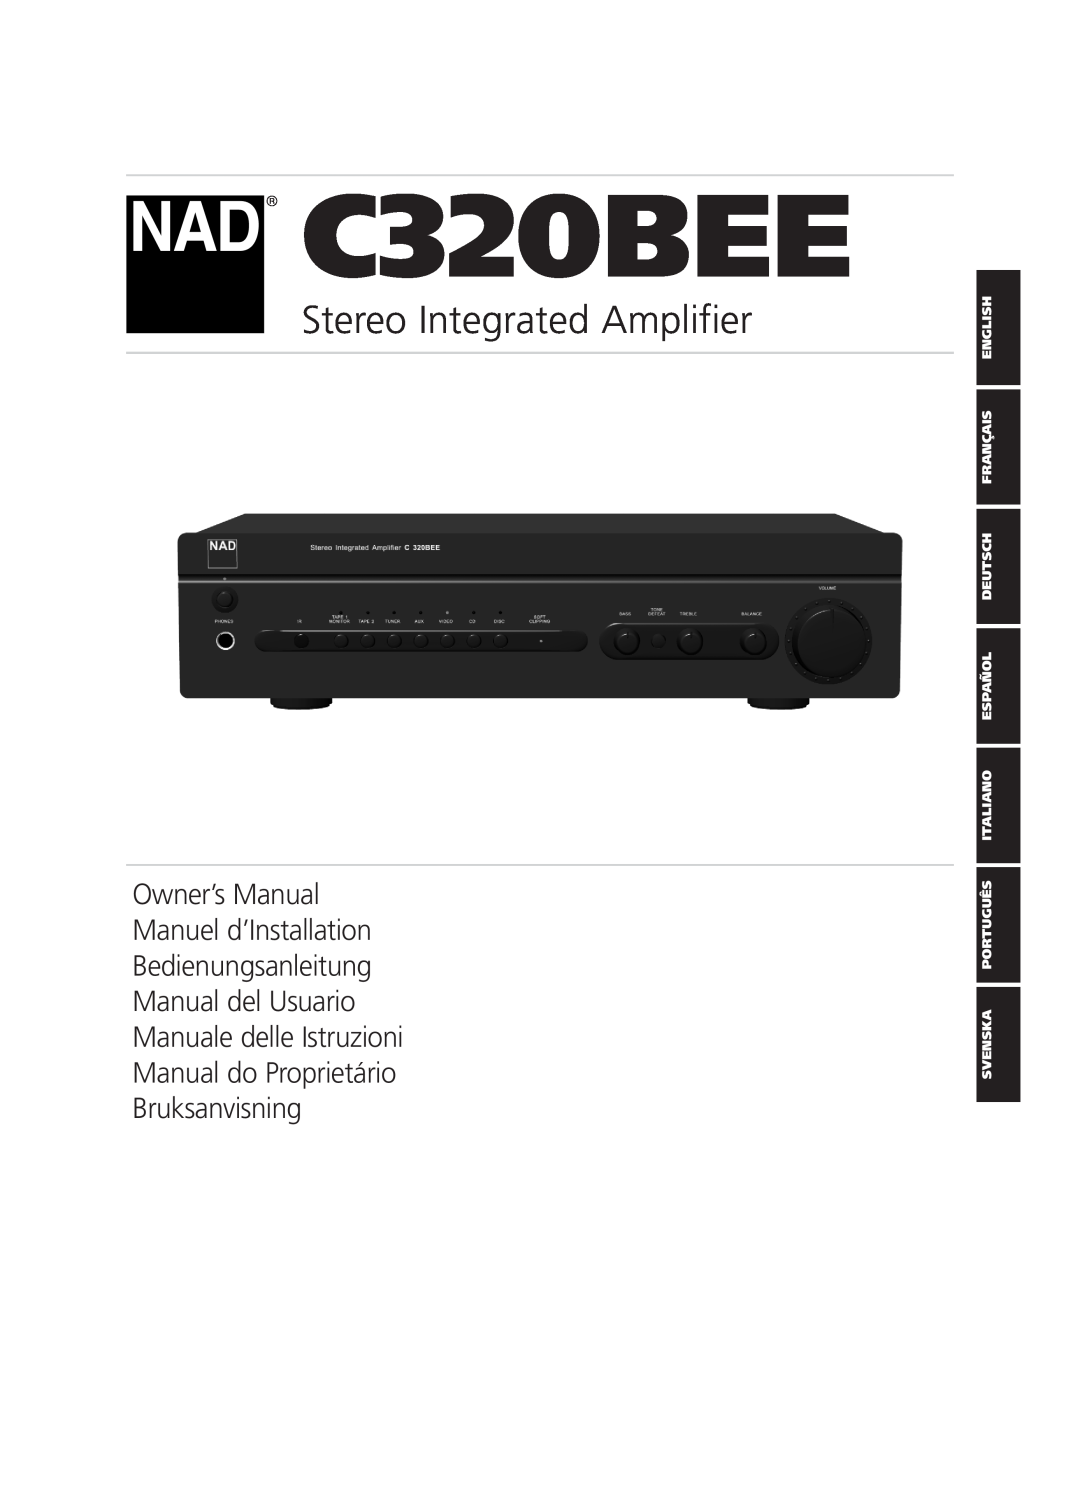 NAD C320BEE owner manual Stereo Integrated Amplifier, Bedienungsanleitung Manual del Usuario, Bruksanvisning 